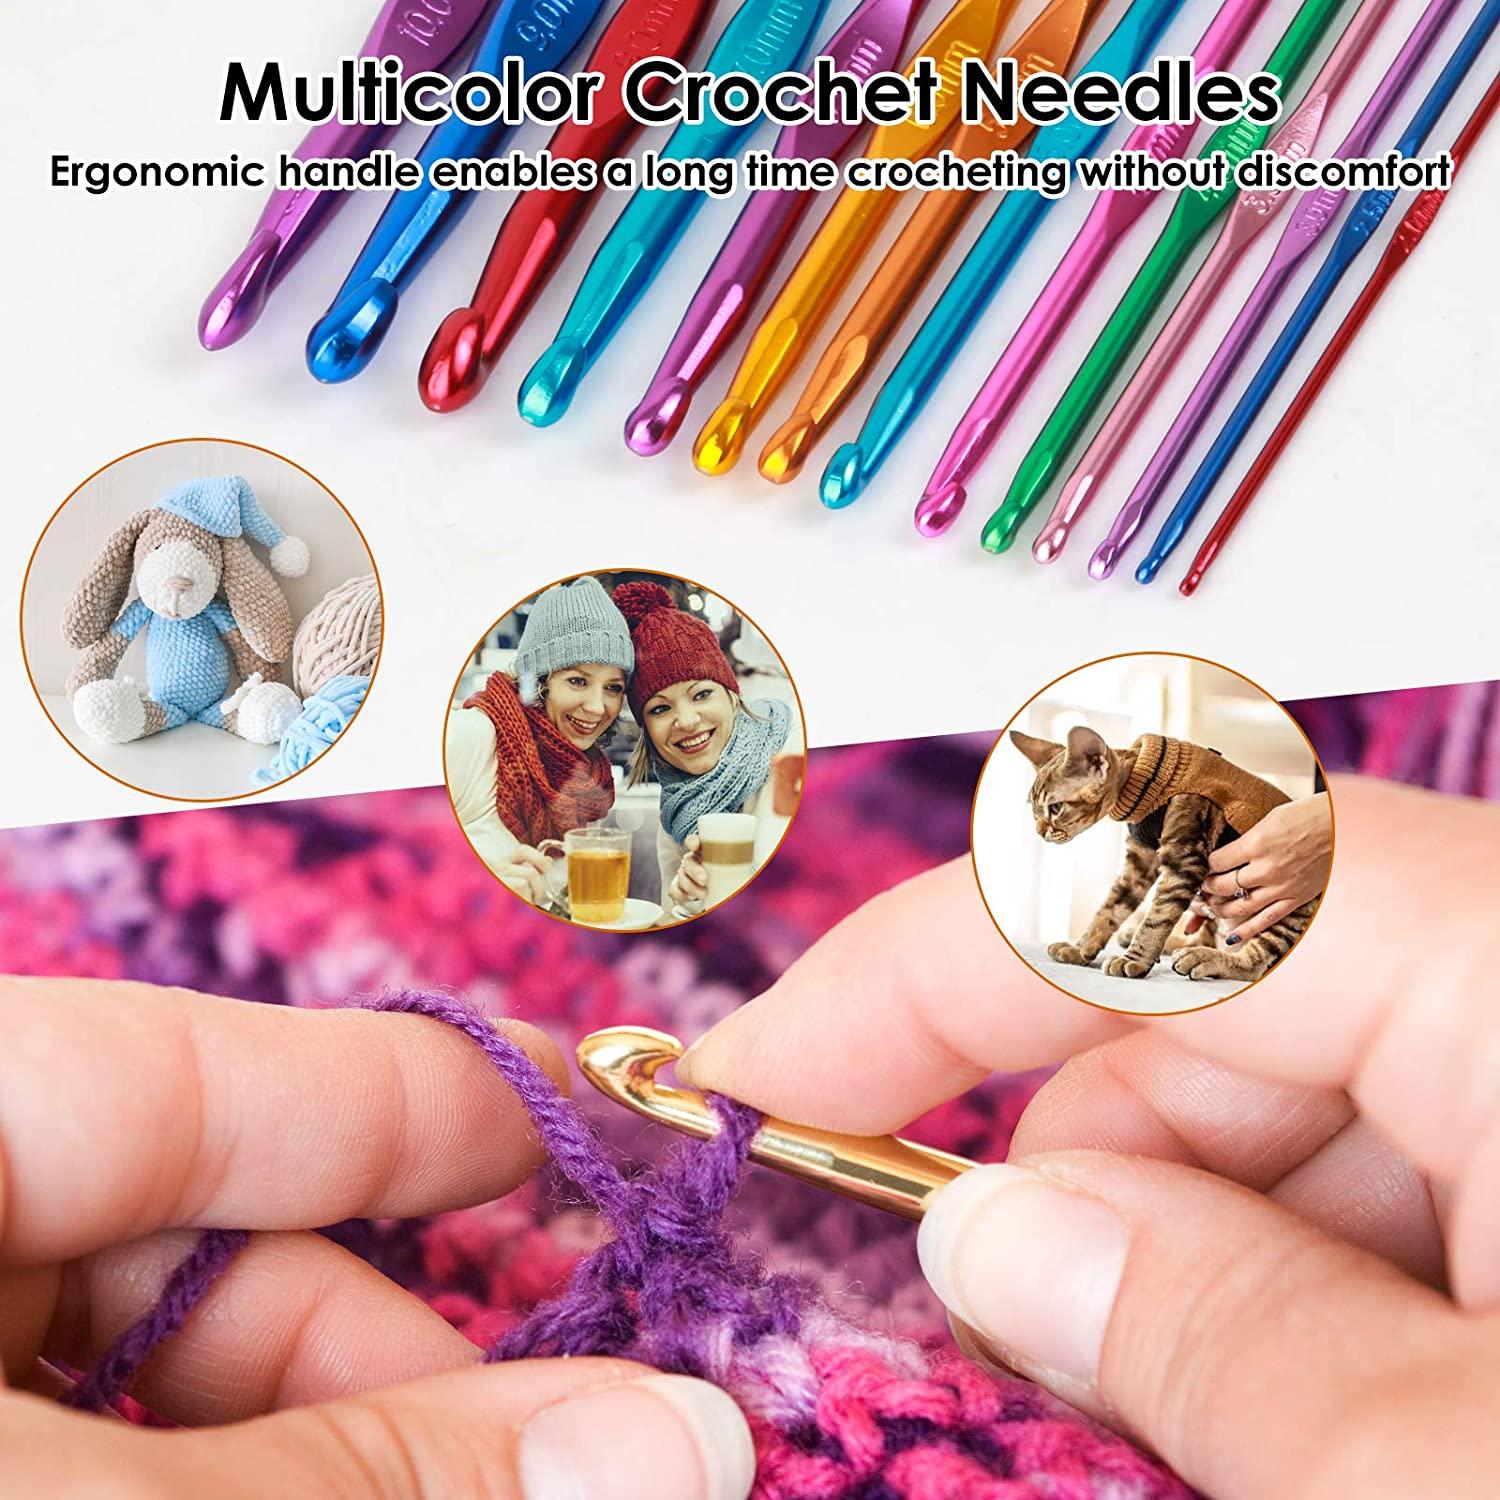 Metal Crochet Hook sizes 2mm to 10mm - Craft Knitting Yarn Needles